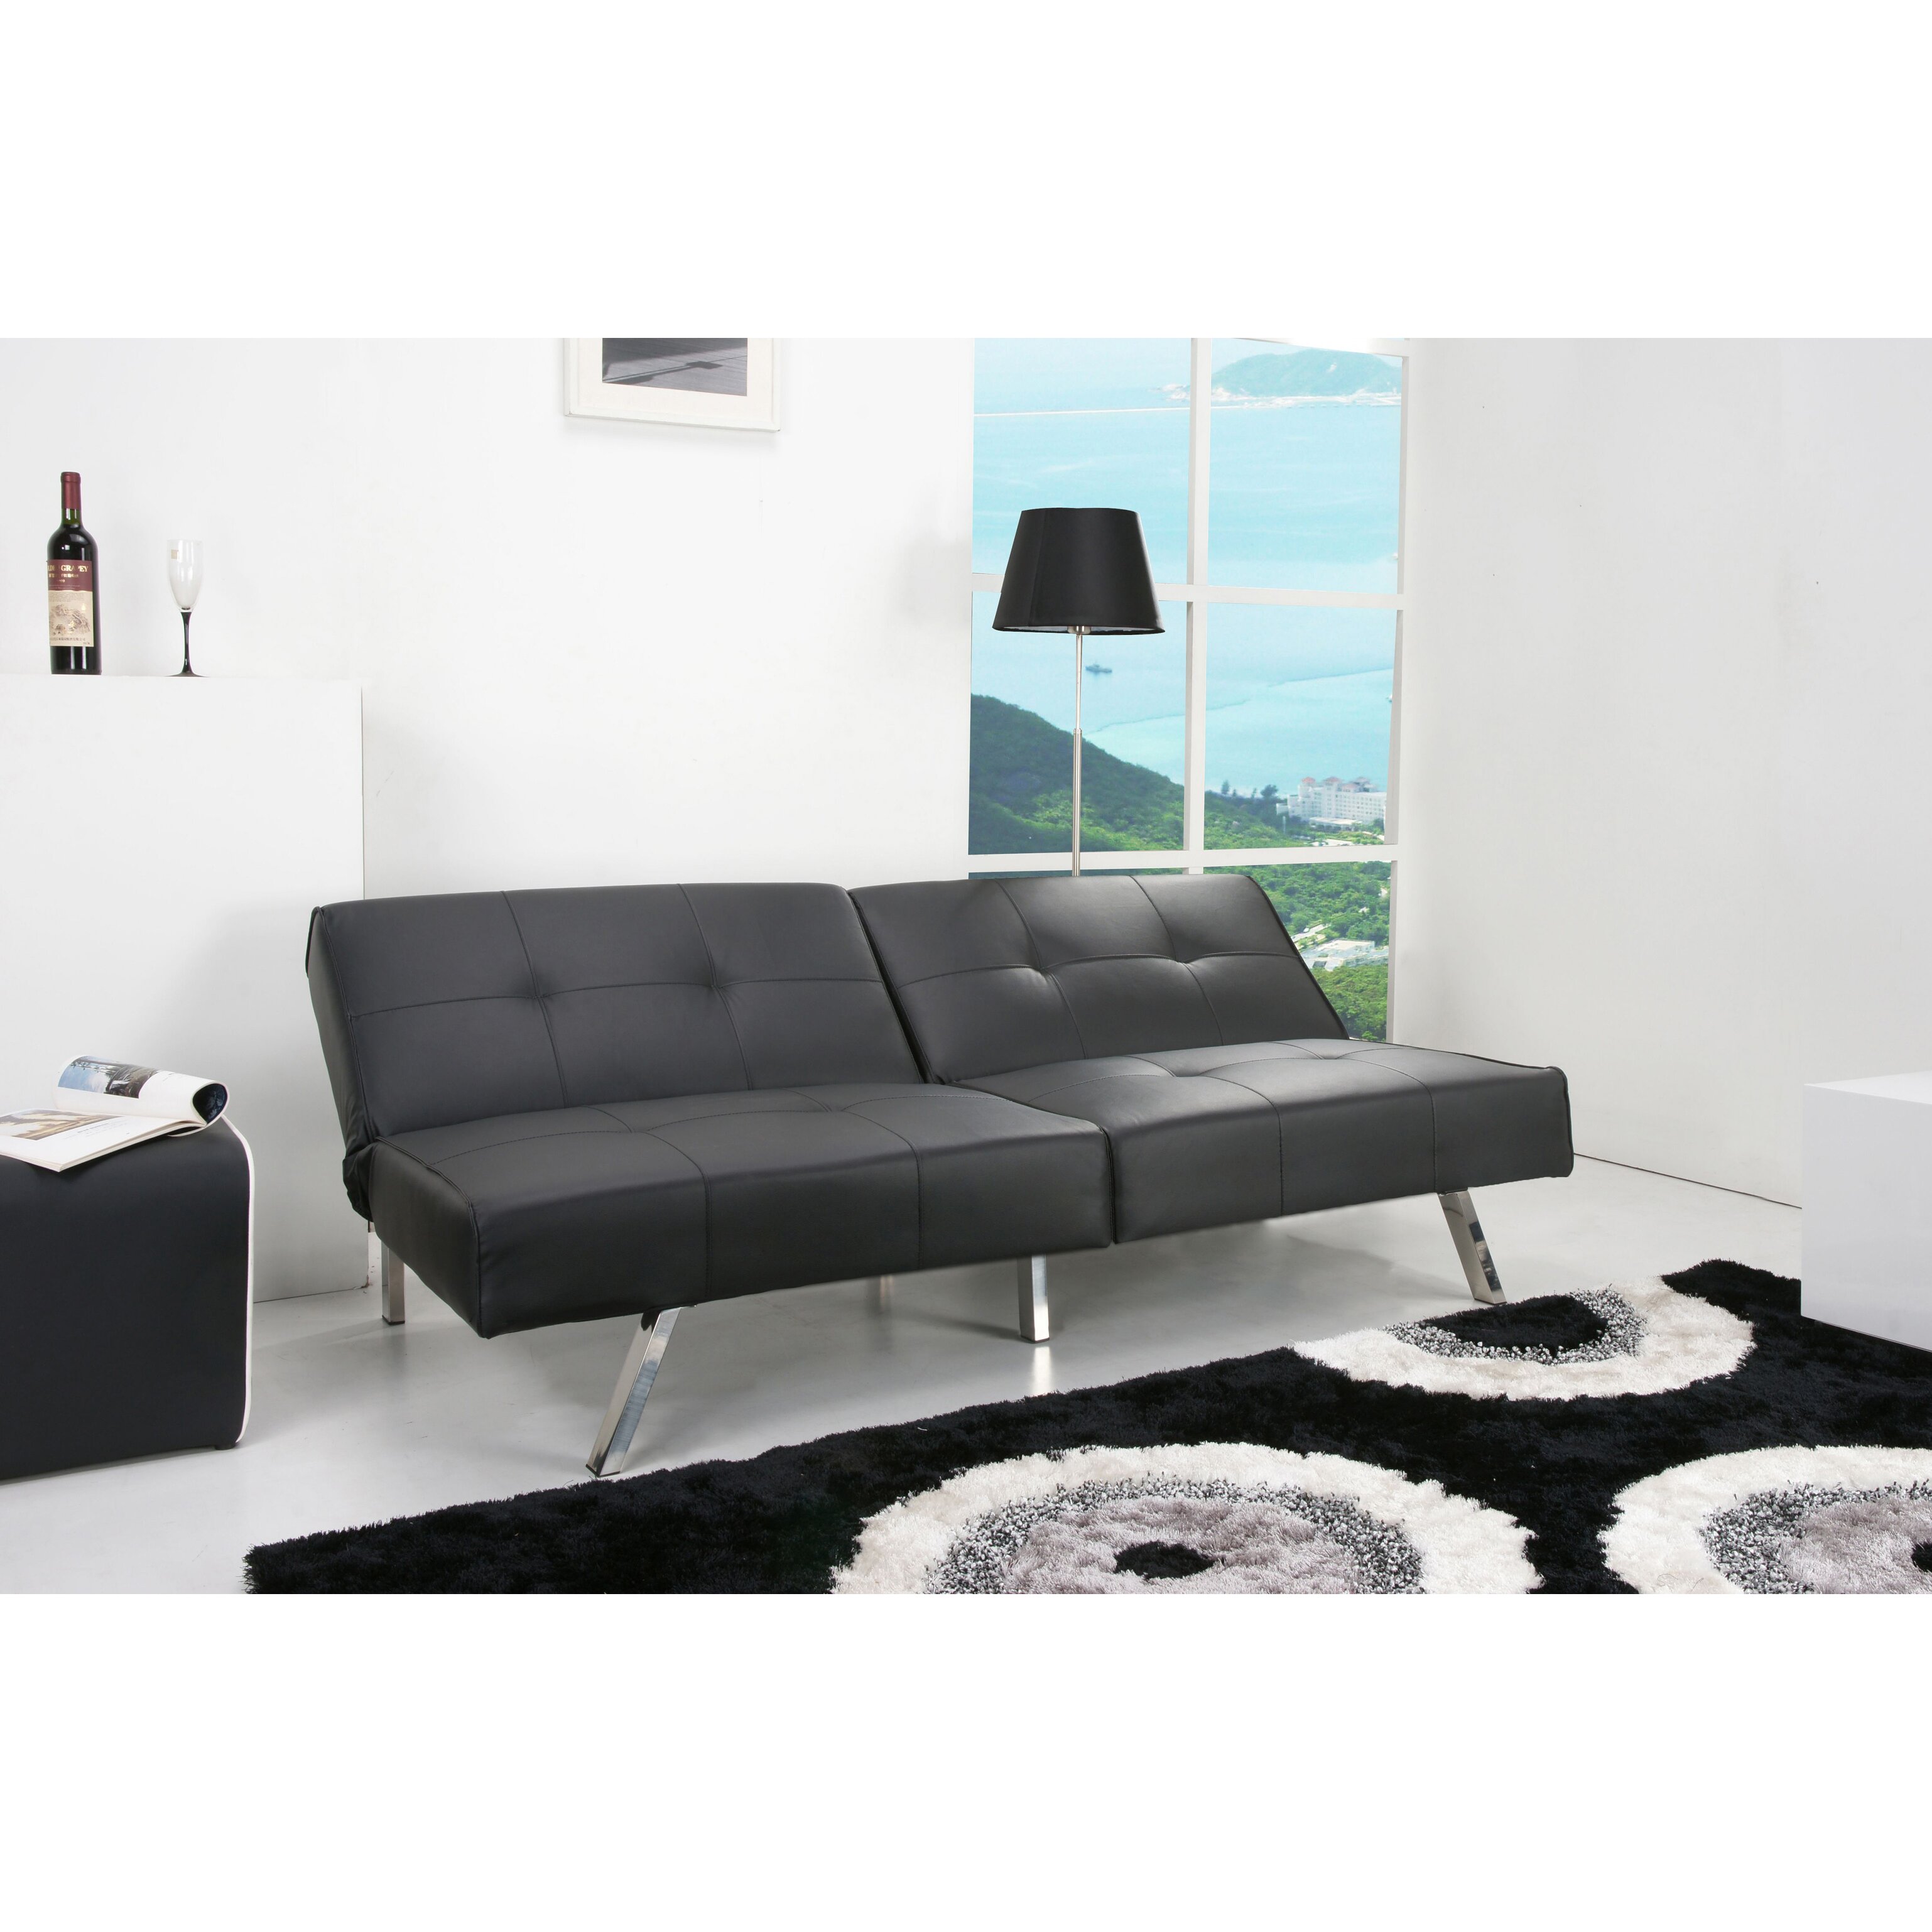 Varick Gallery Rosehill Convertible Futon Sofa Bed